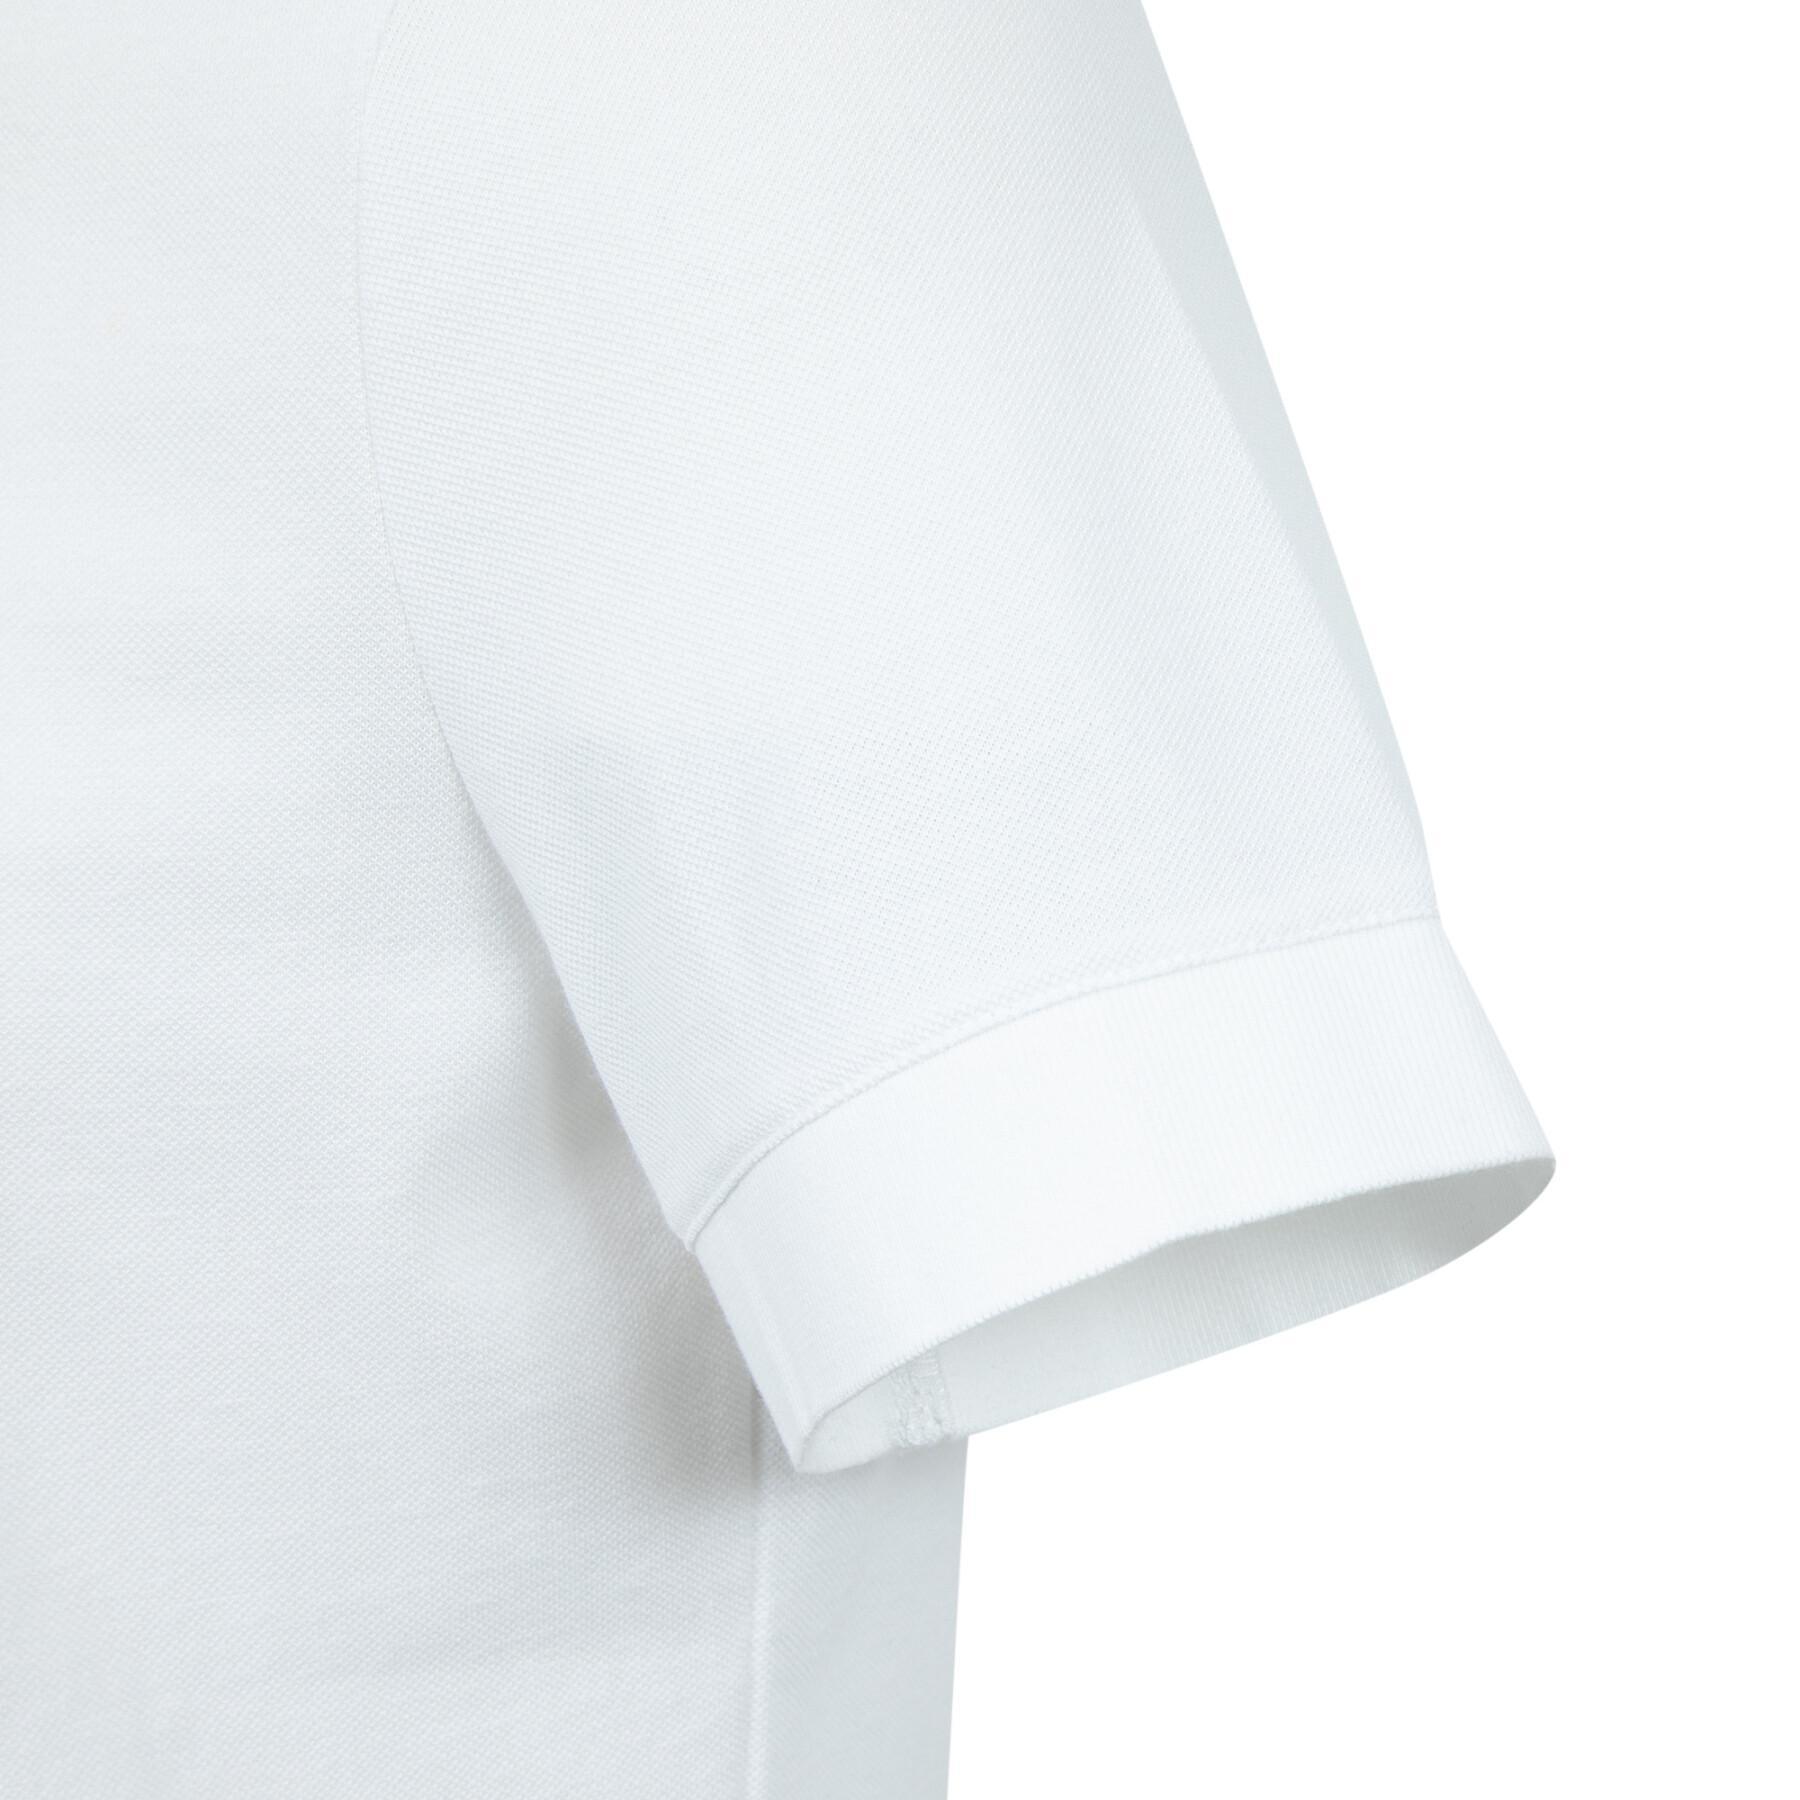 Short sleeve polo shirt Le Coq Sportif Essentiels